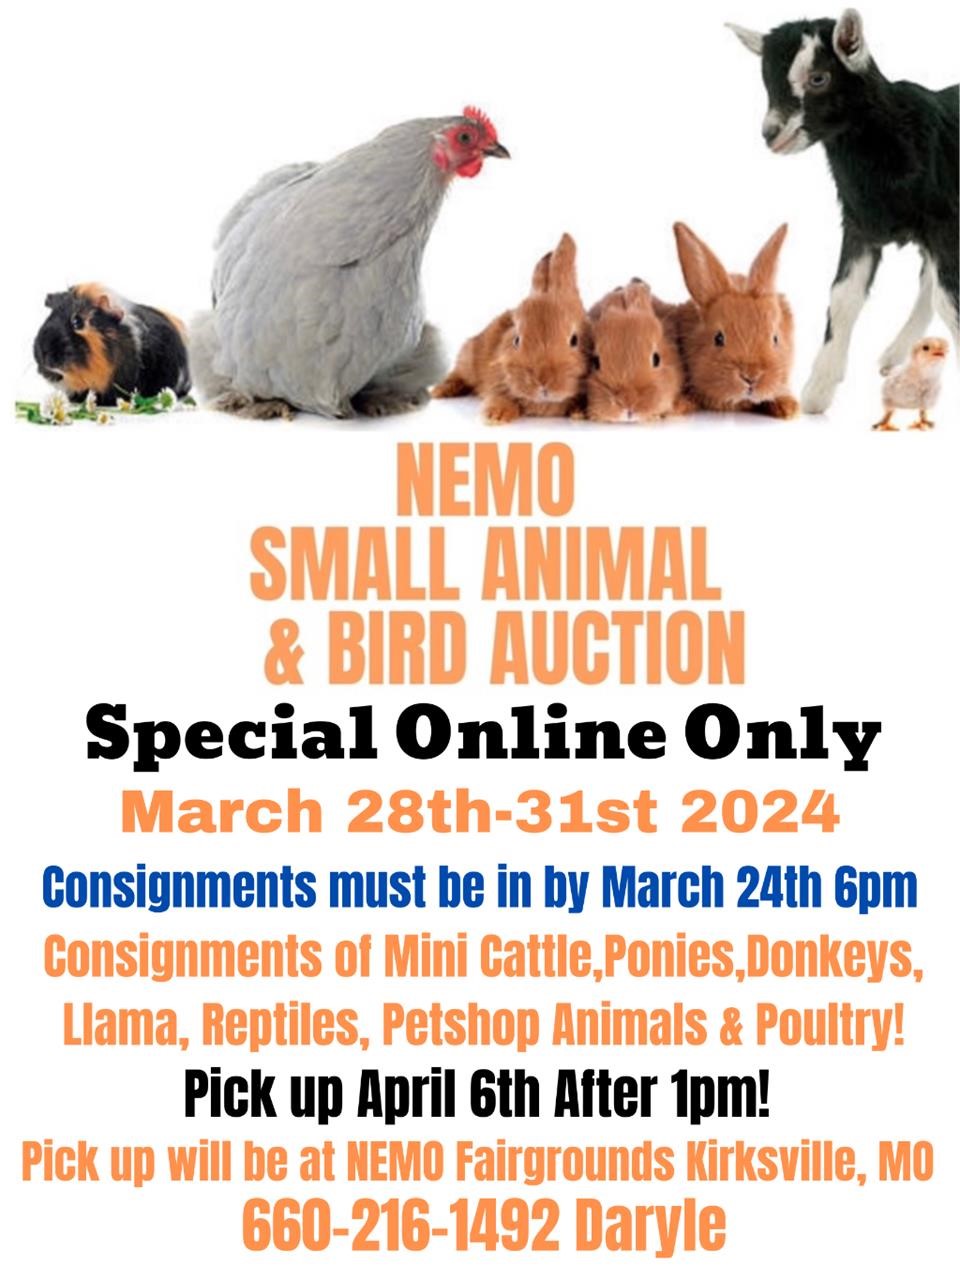 NEMO Animal Auctions Easter online Animal Egg-Stravaganza